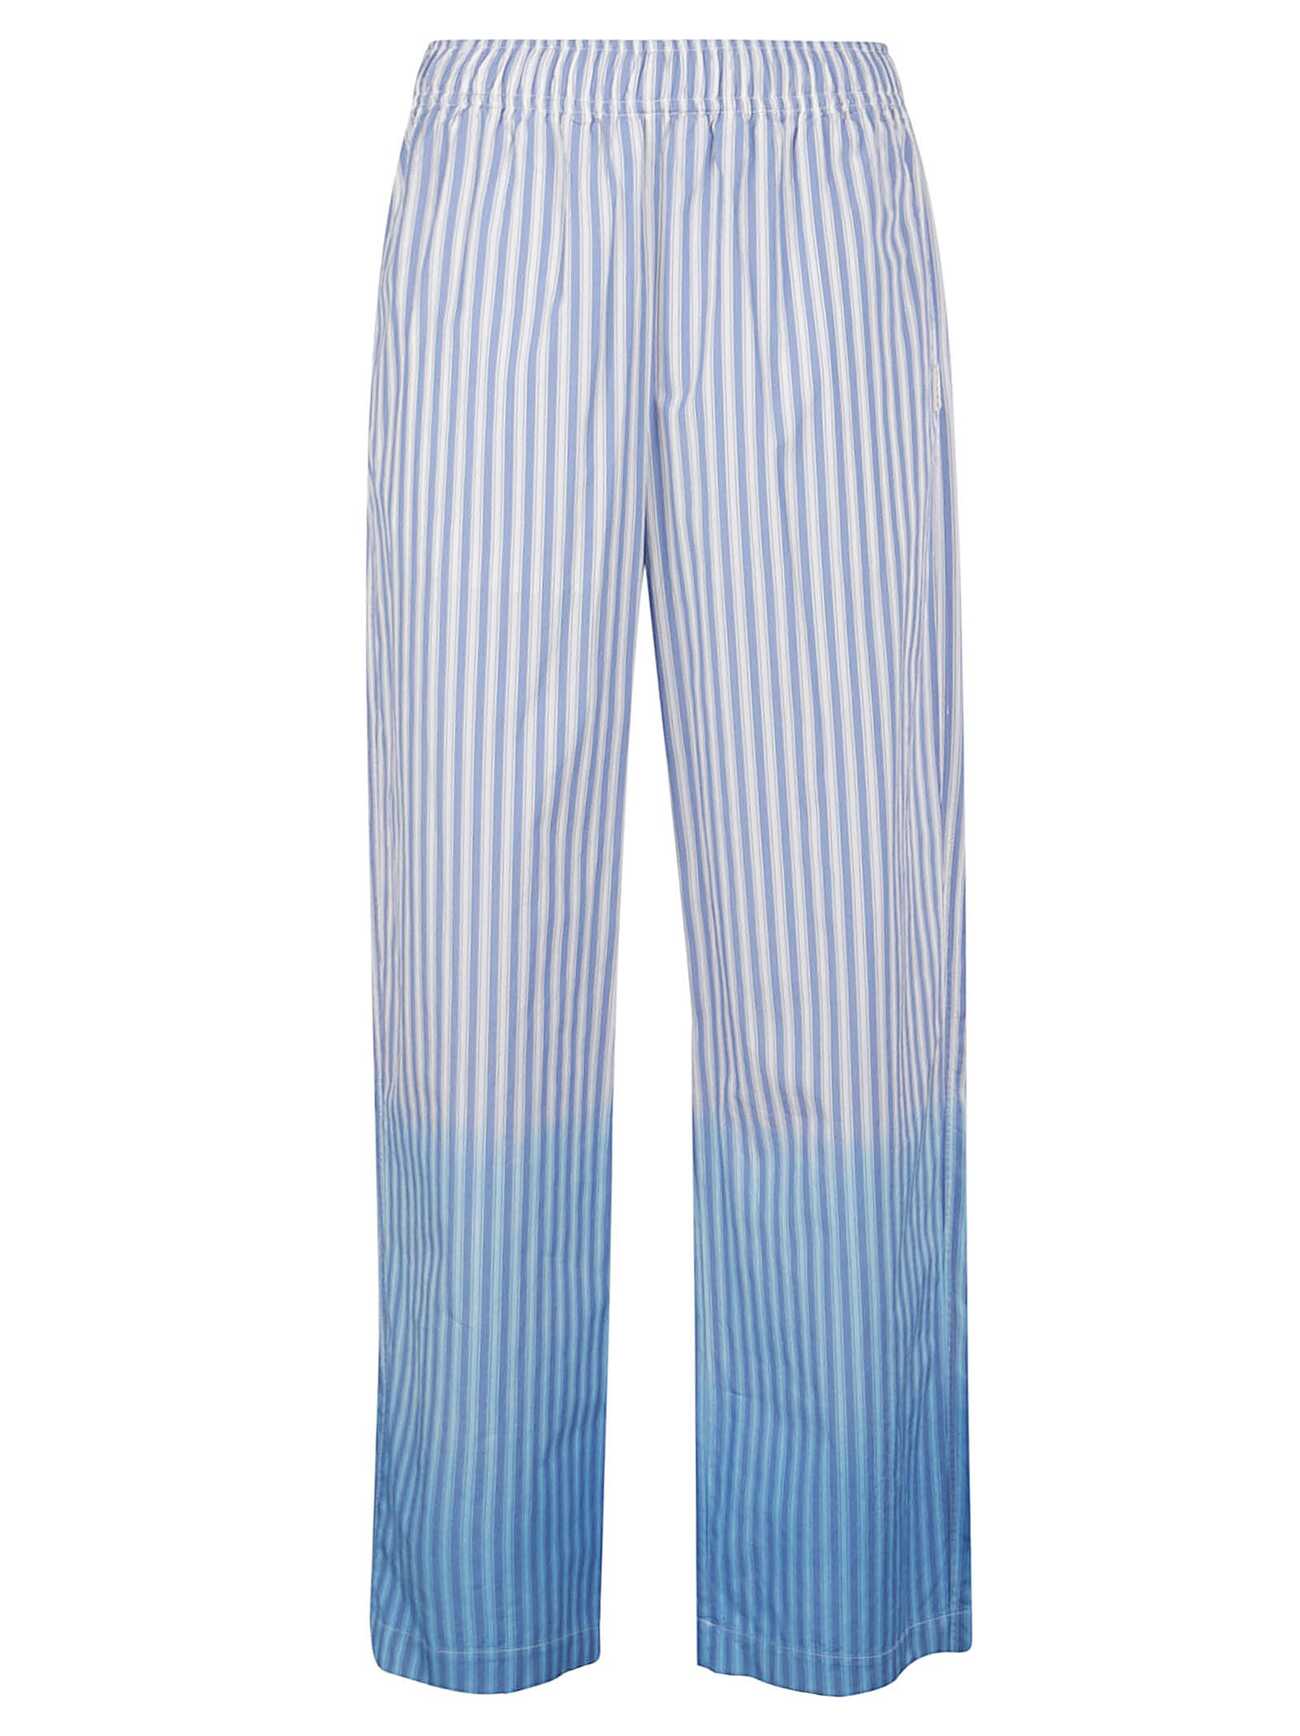 Marni Long Drawstring Pant in blue